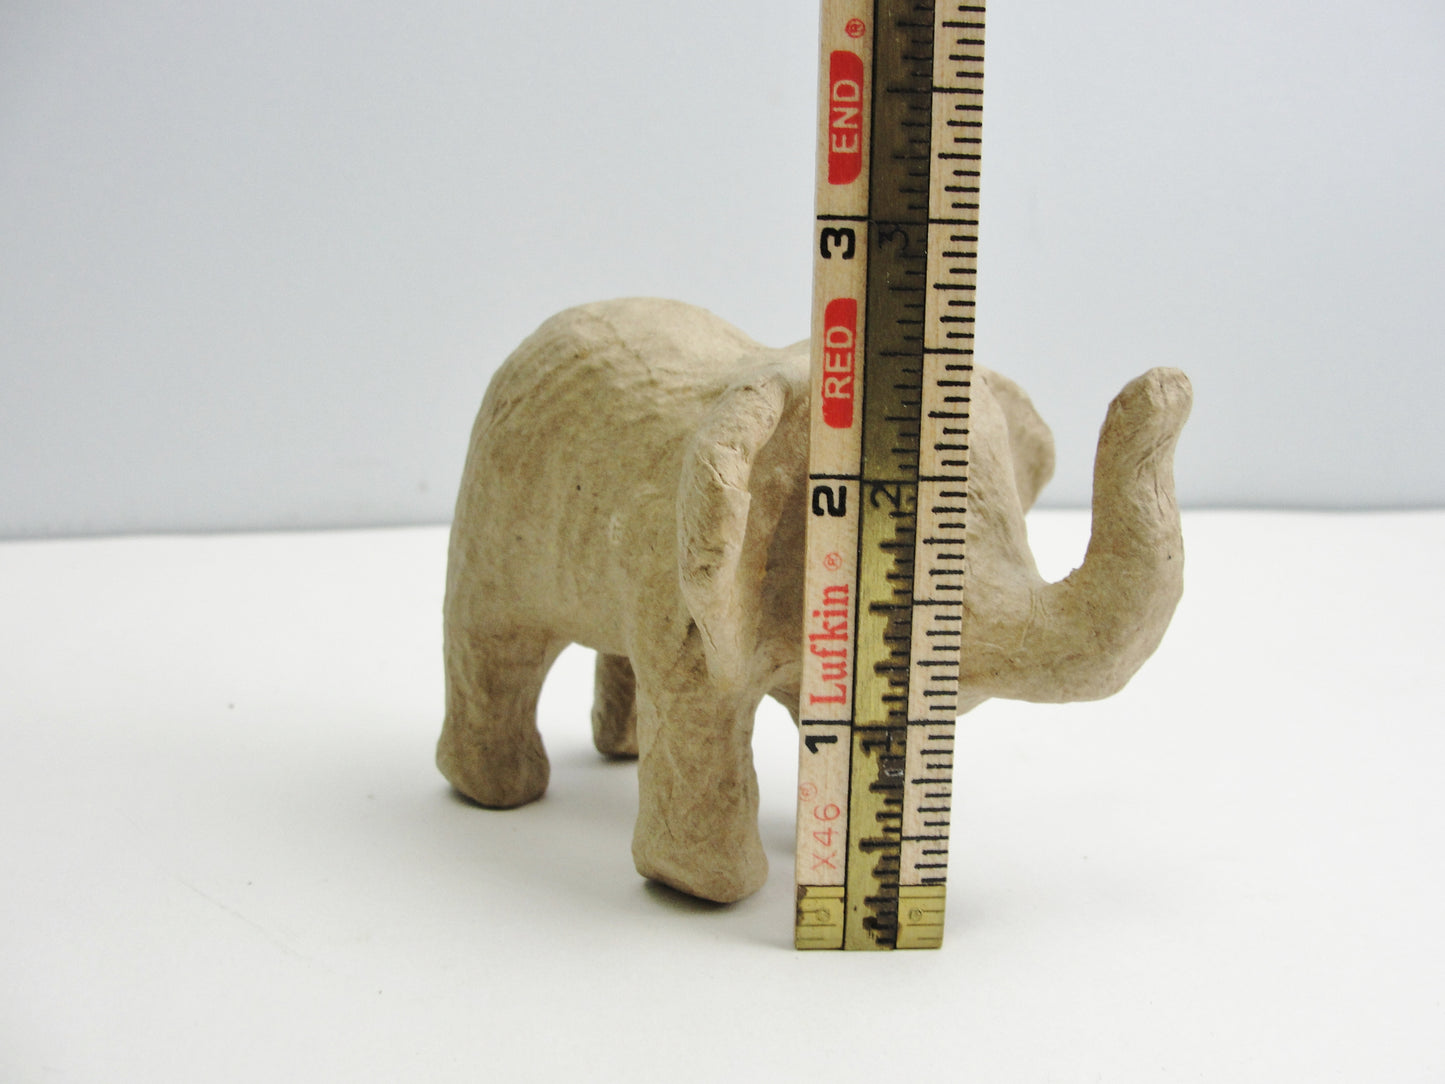 Small paper mache elephant